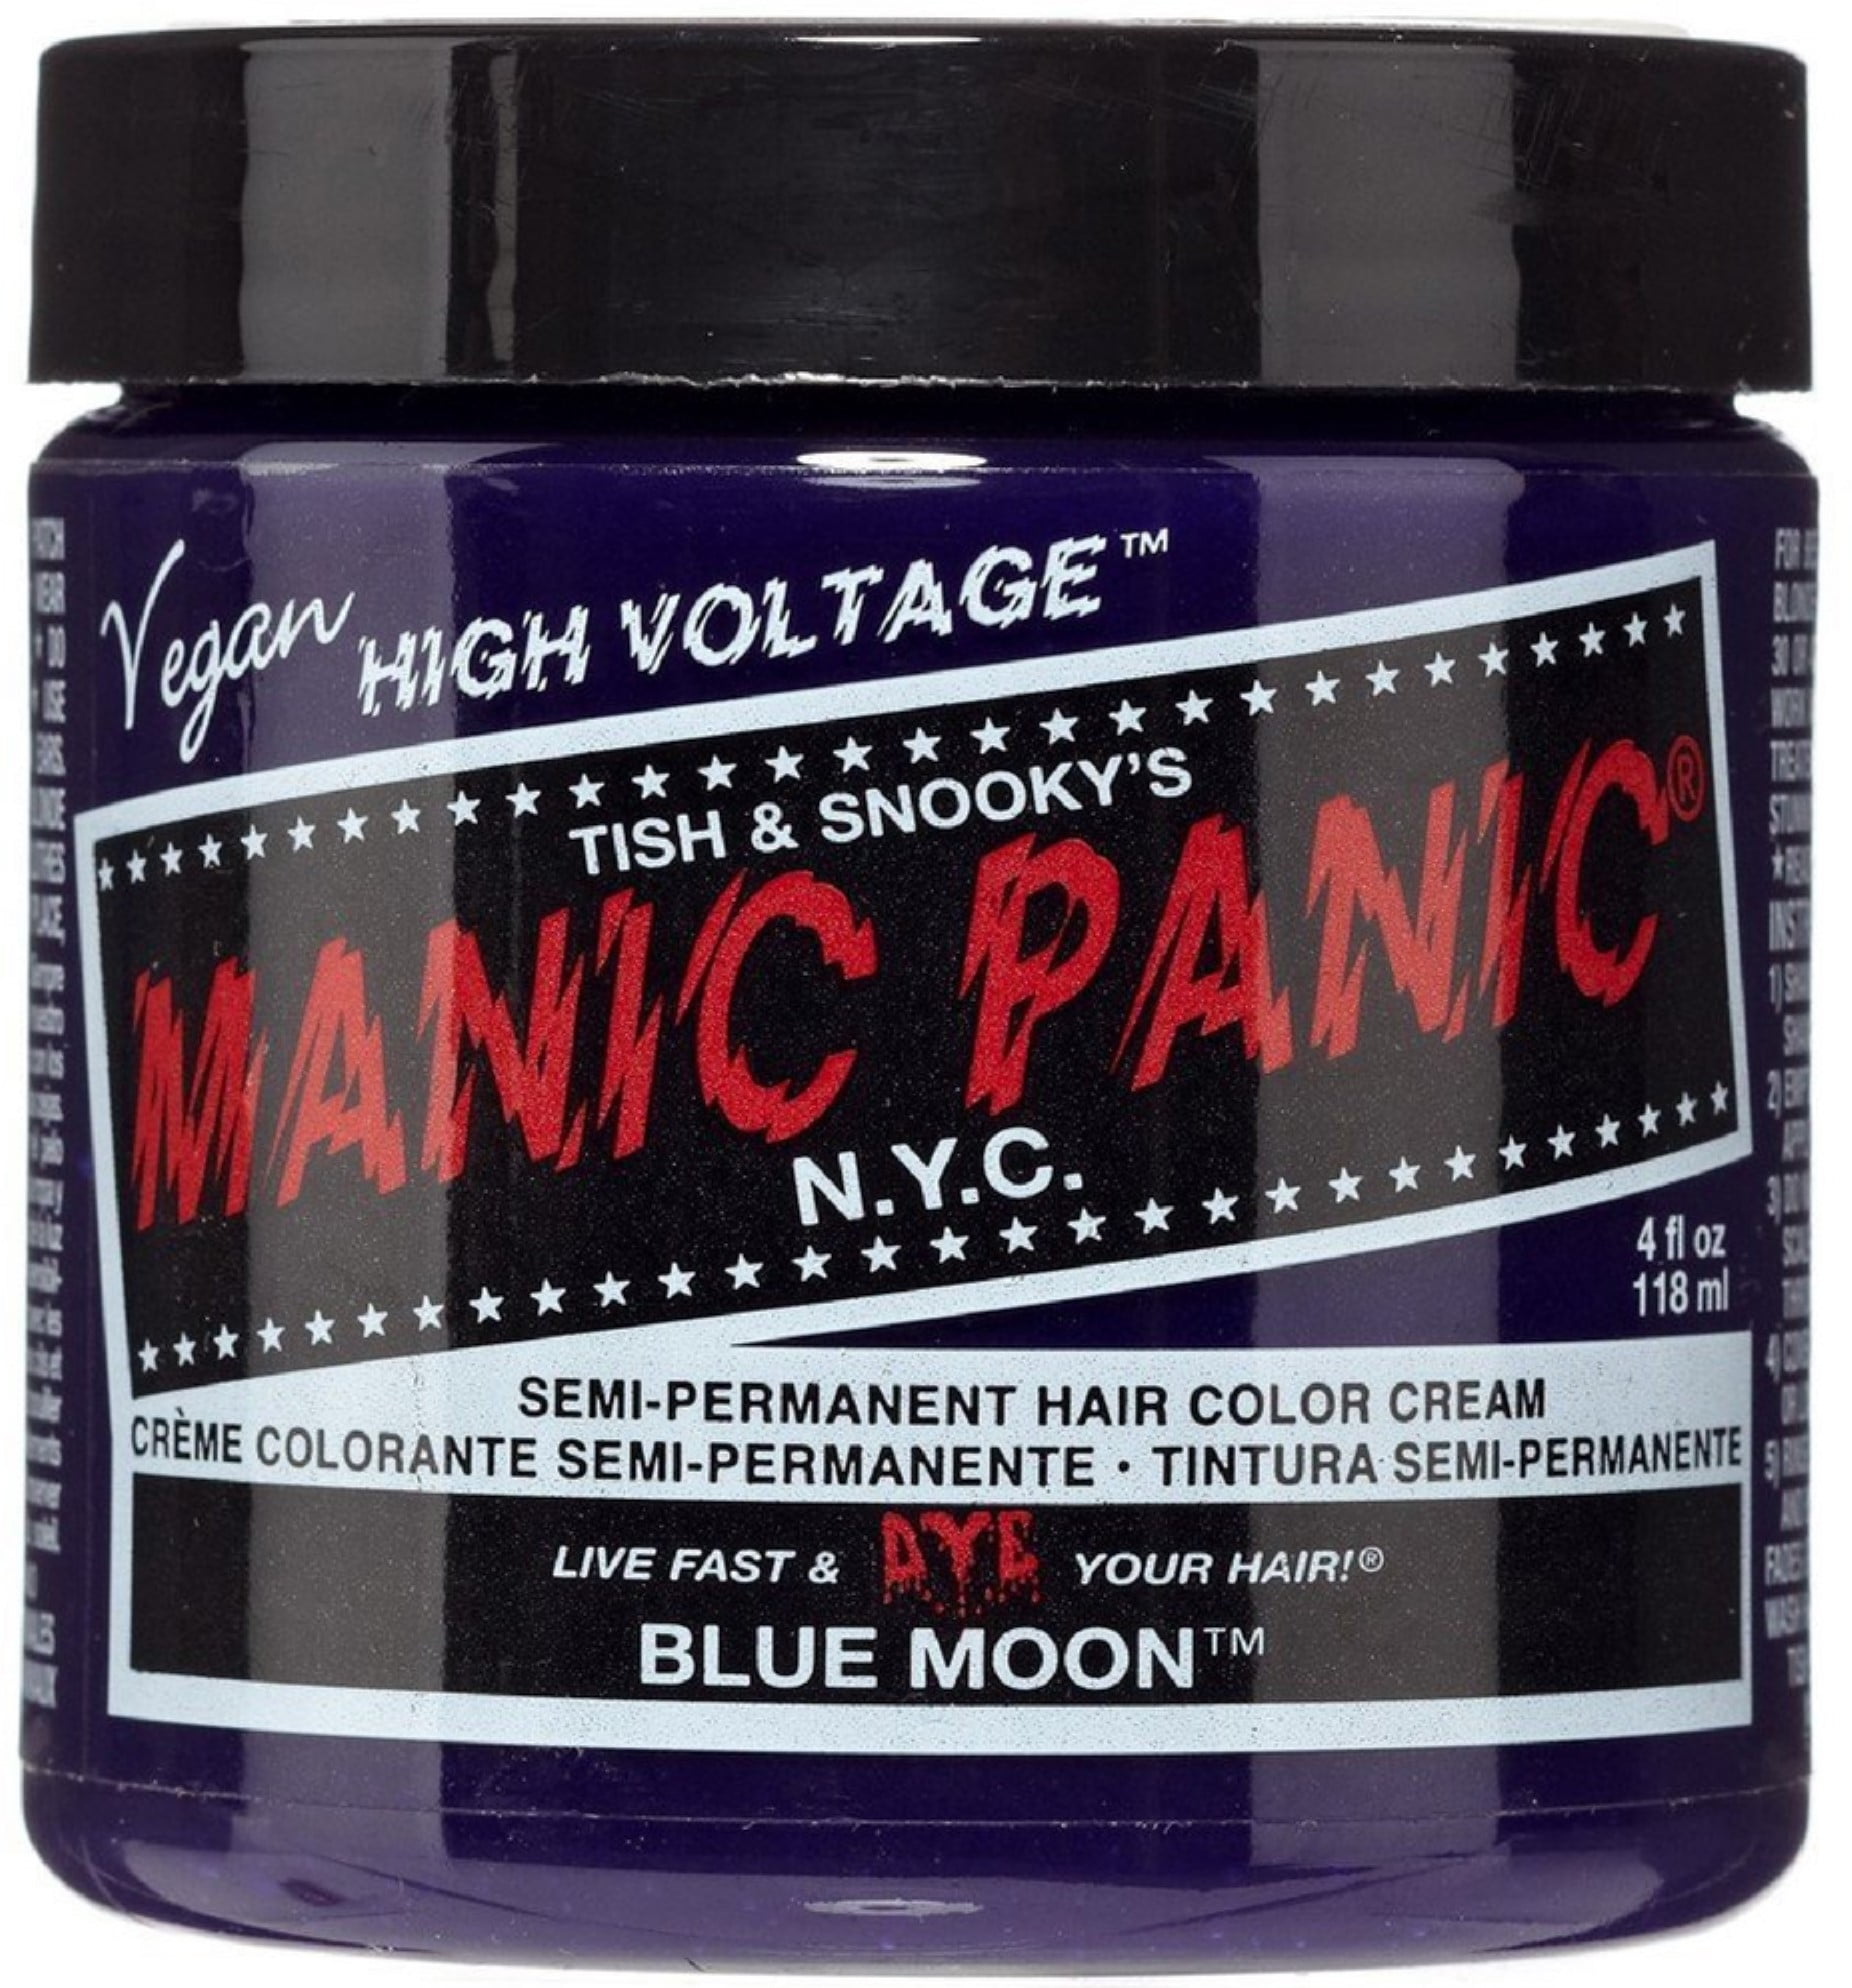 Manic Panic Semi-Permanent Hair Color Cream, Blue Moon 4 oz 